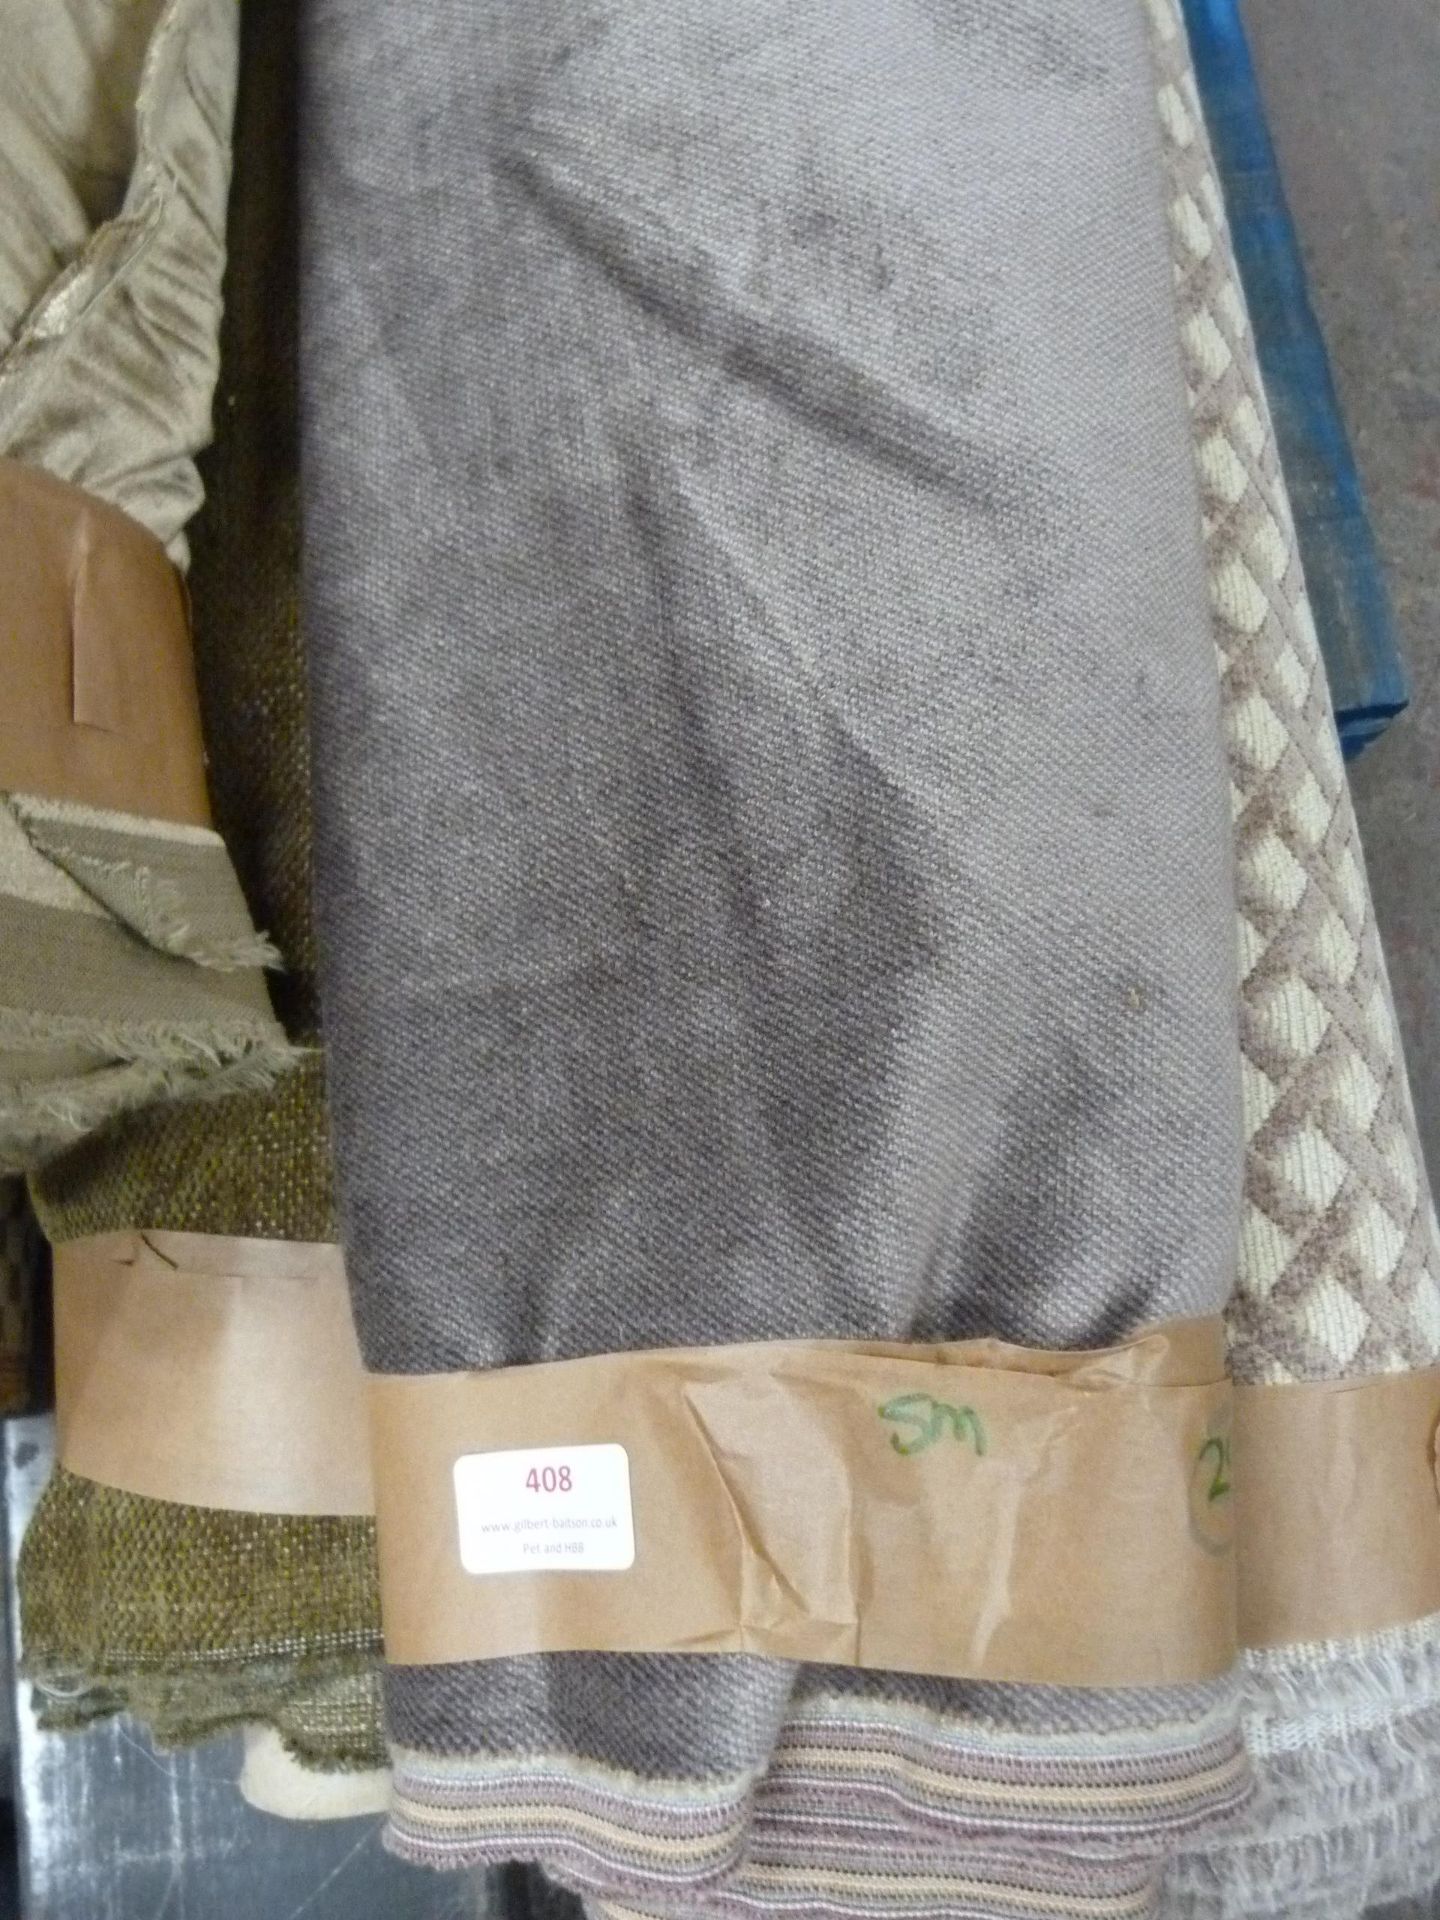 5m Roll of Grey Velvet Chenille Curtain/Upholstery Fabric - Image 2 of 2